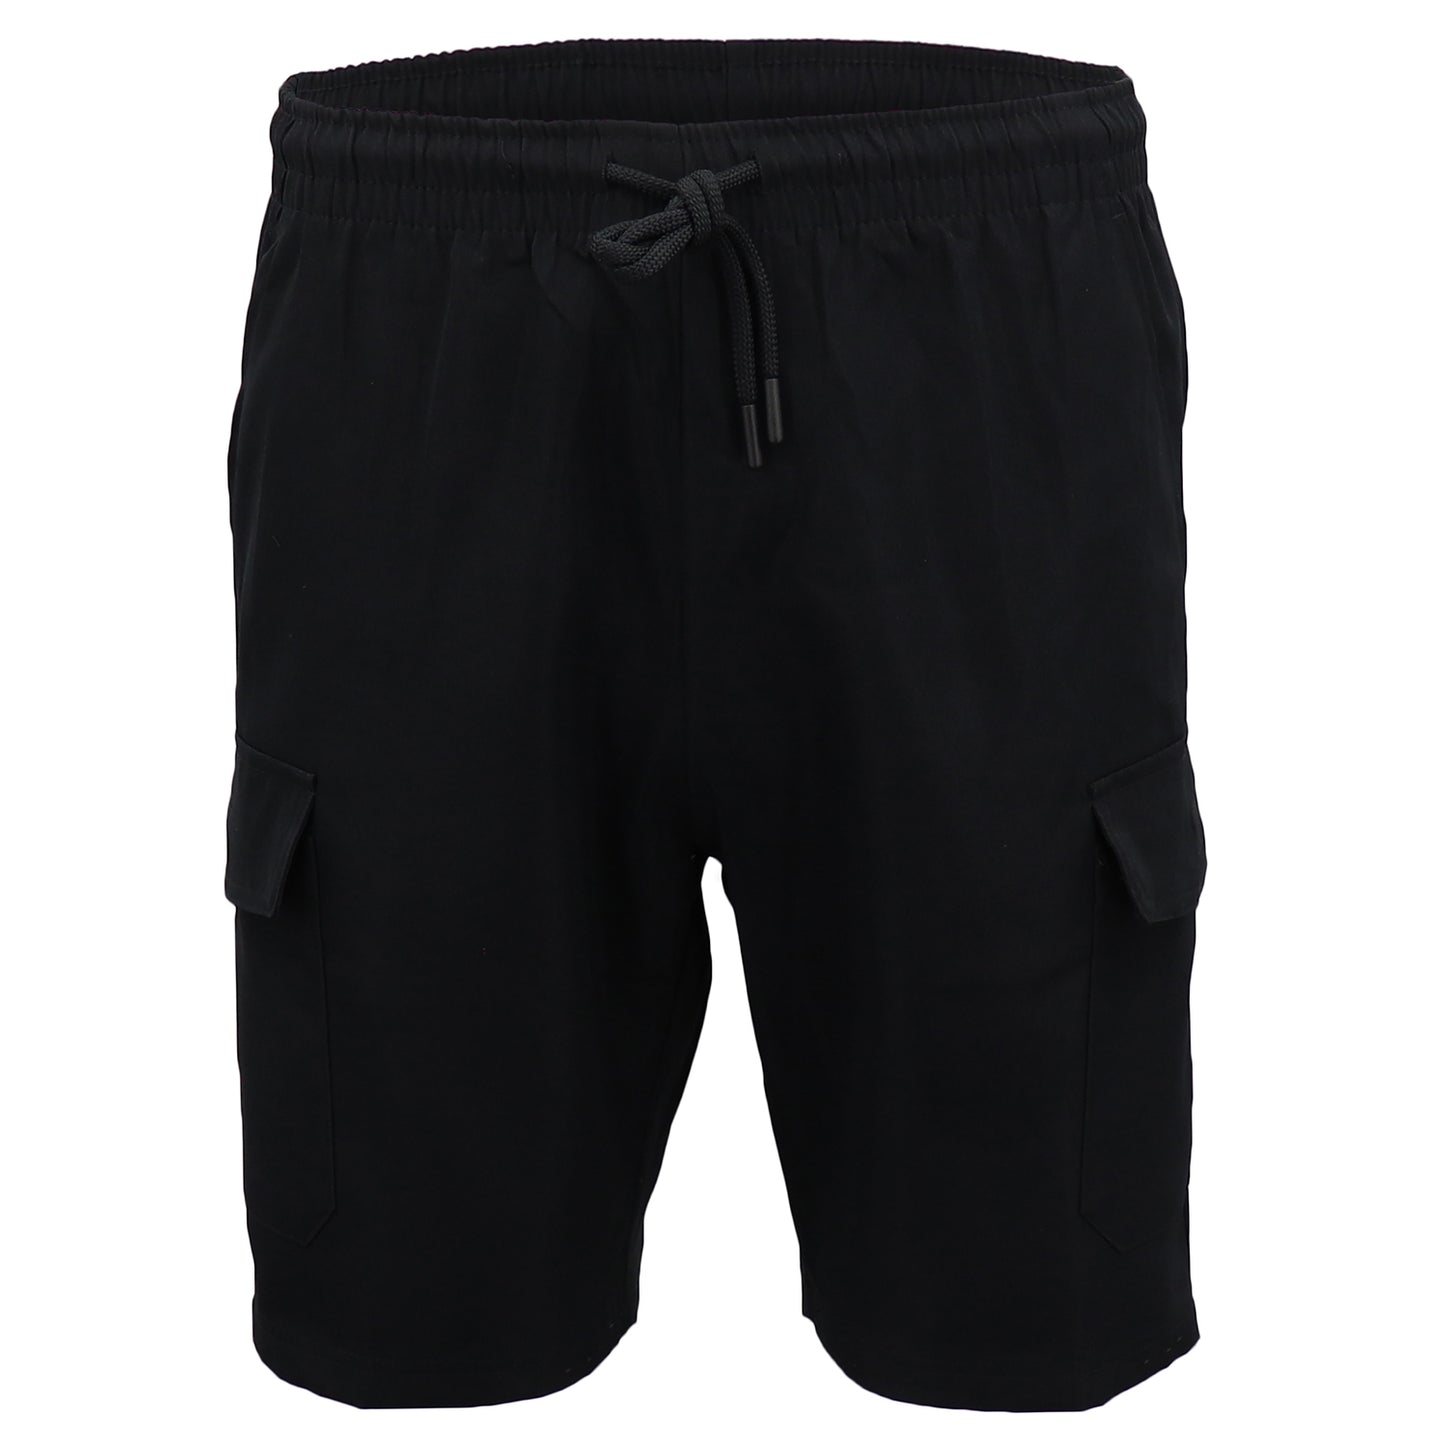 Men's Cargo Shorts 4 Pockets Cascual Work Trousers Active Pants Elastic Waist, Khaki, XS